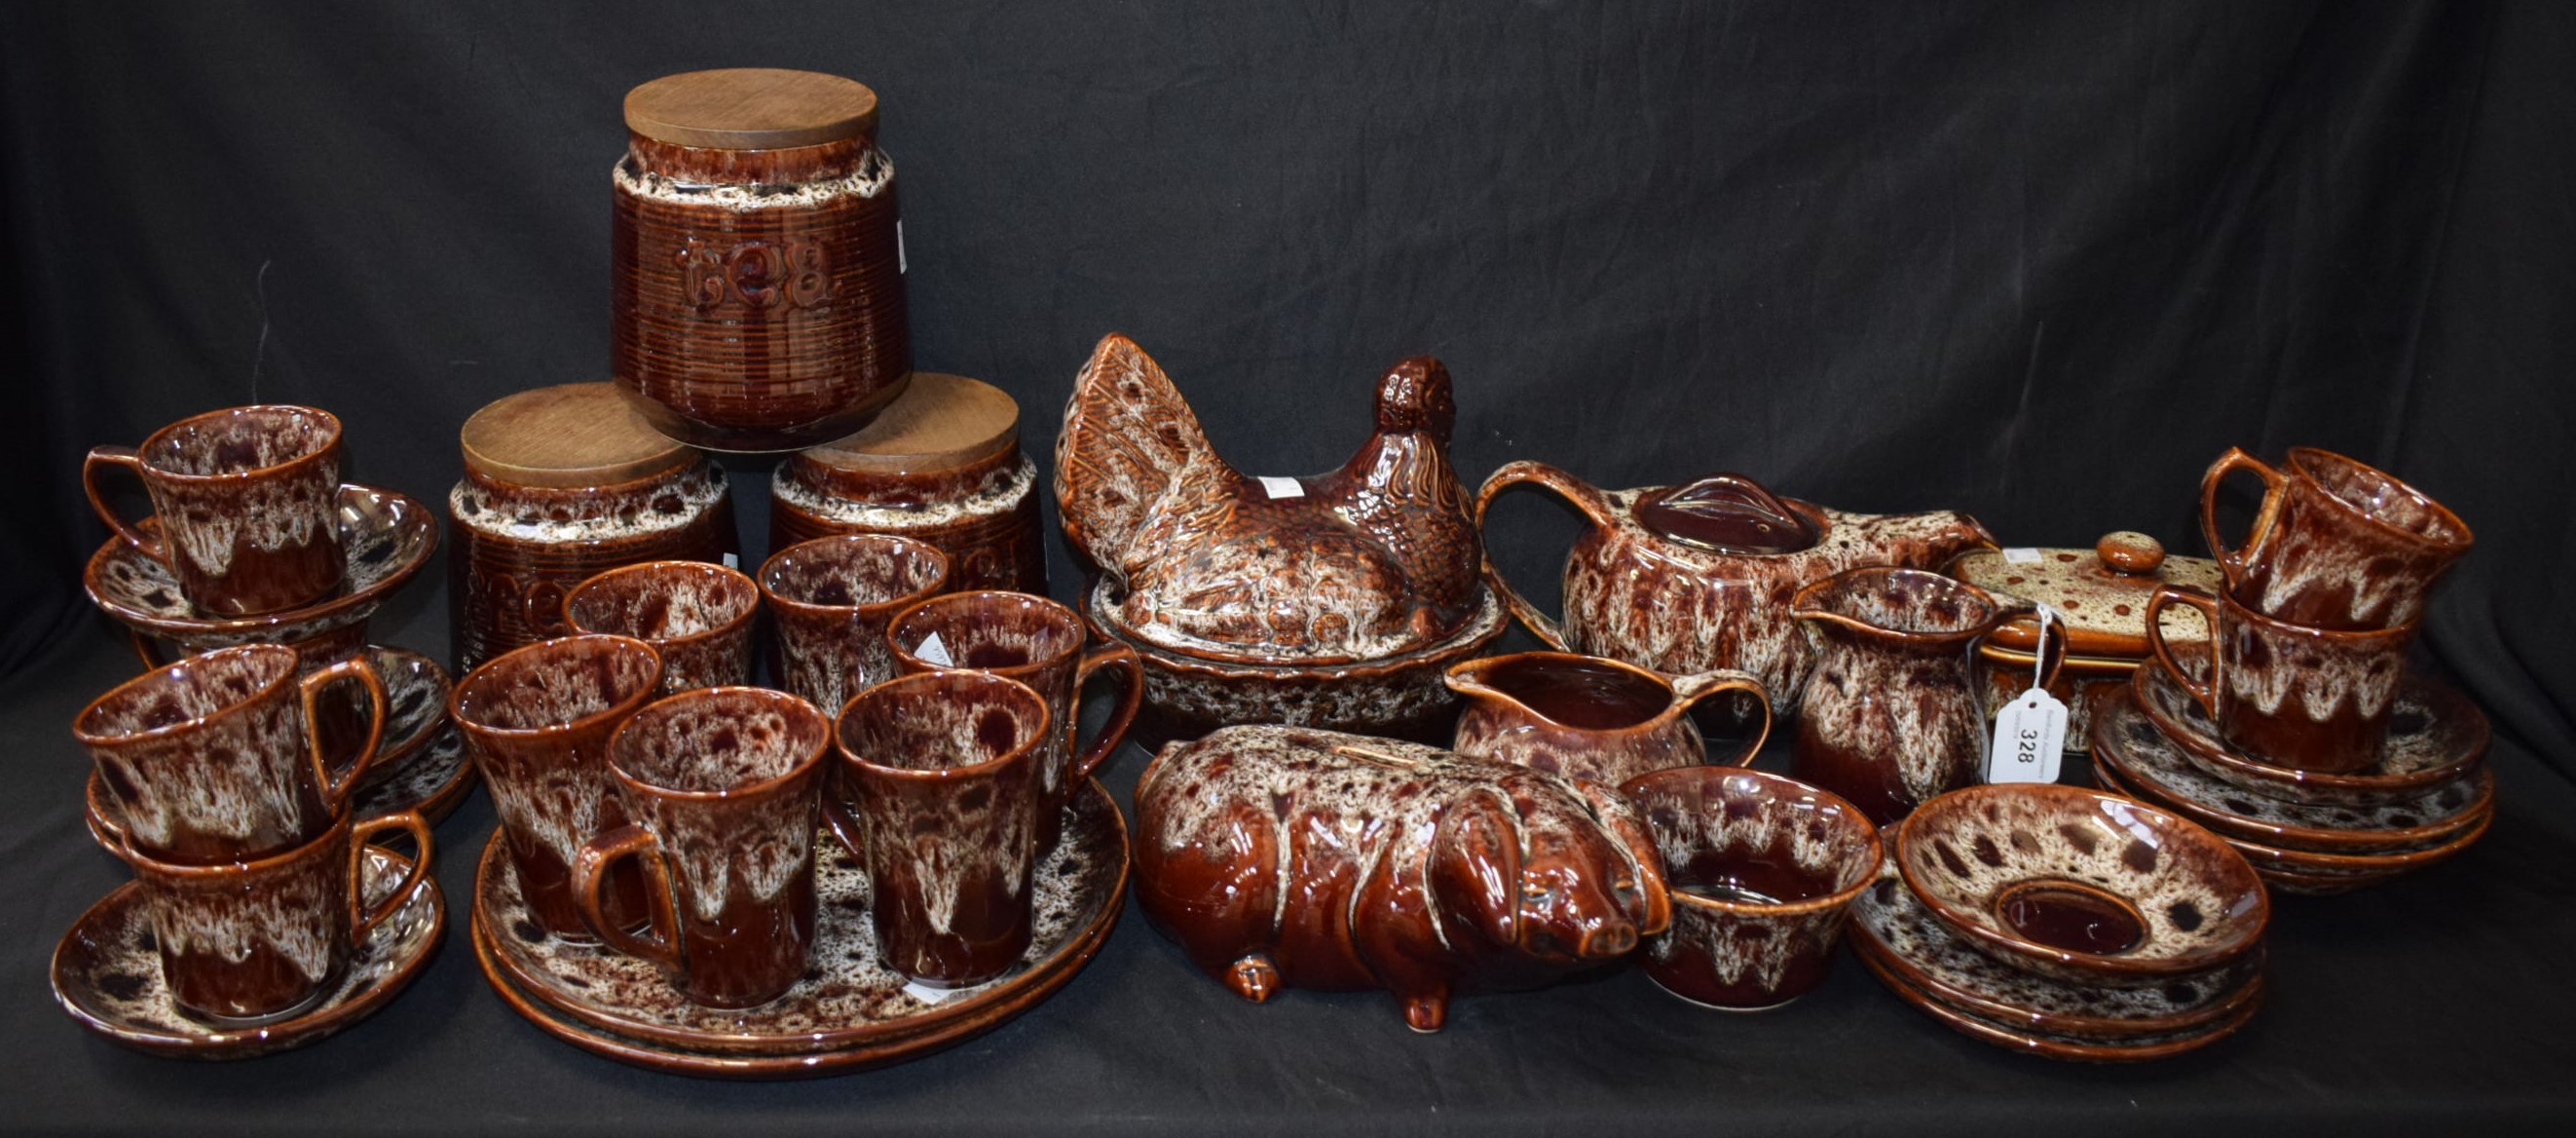 A Cornish Kernewek ceramic treacle glazed tea service, including teapot, cups and saucers,